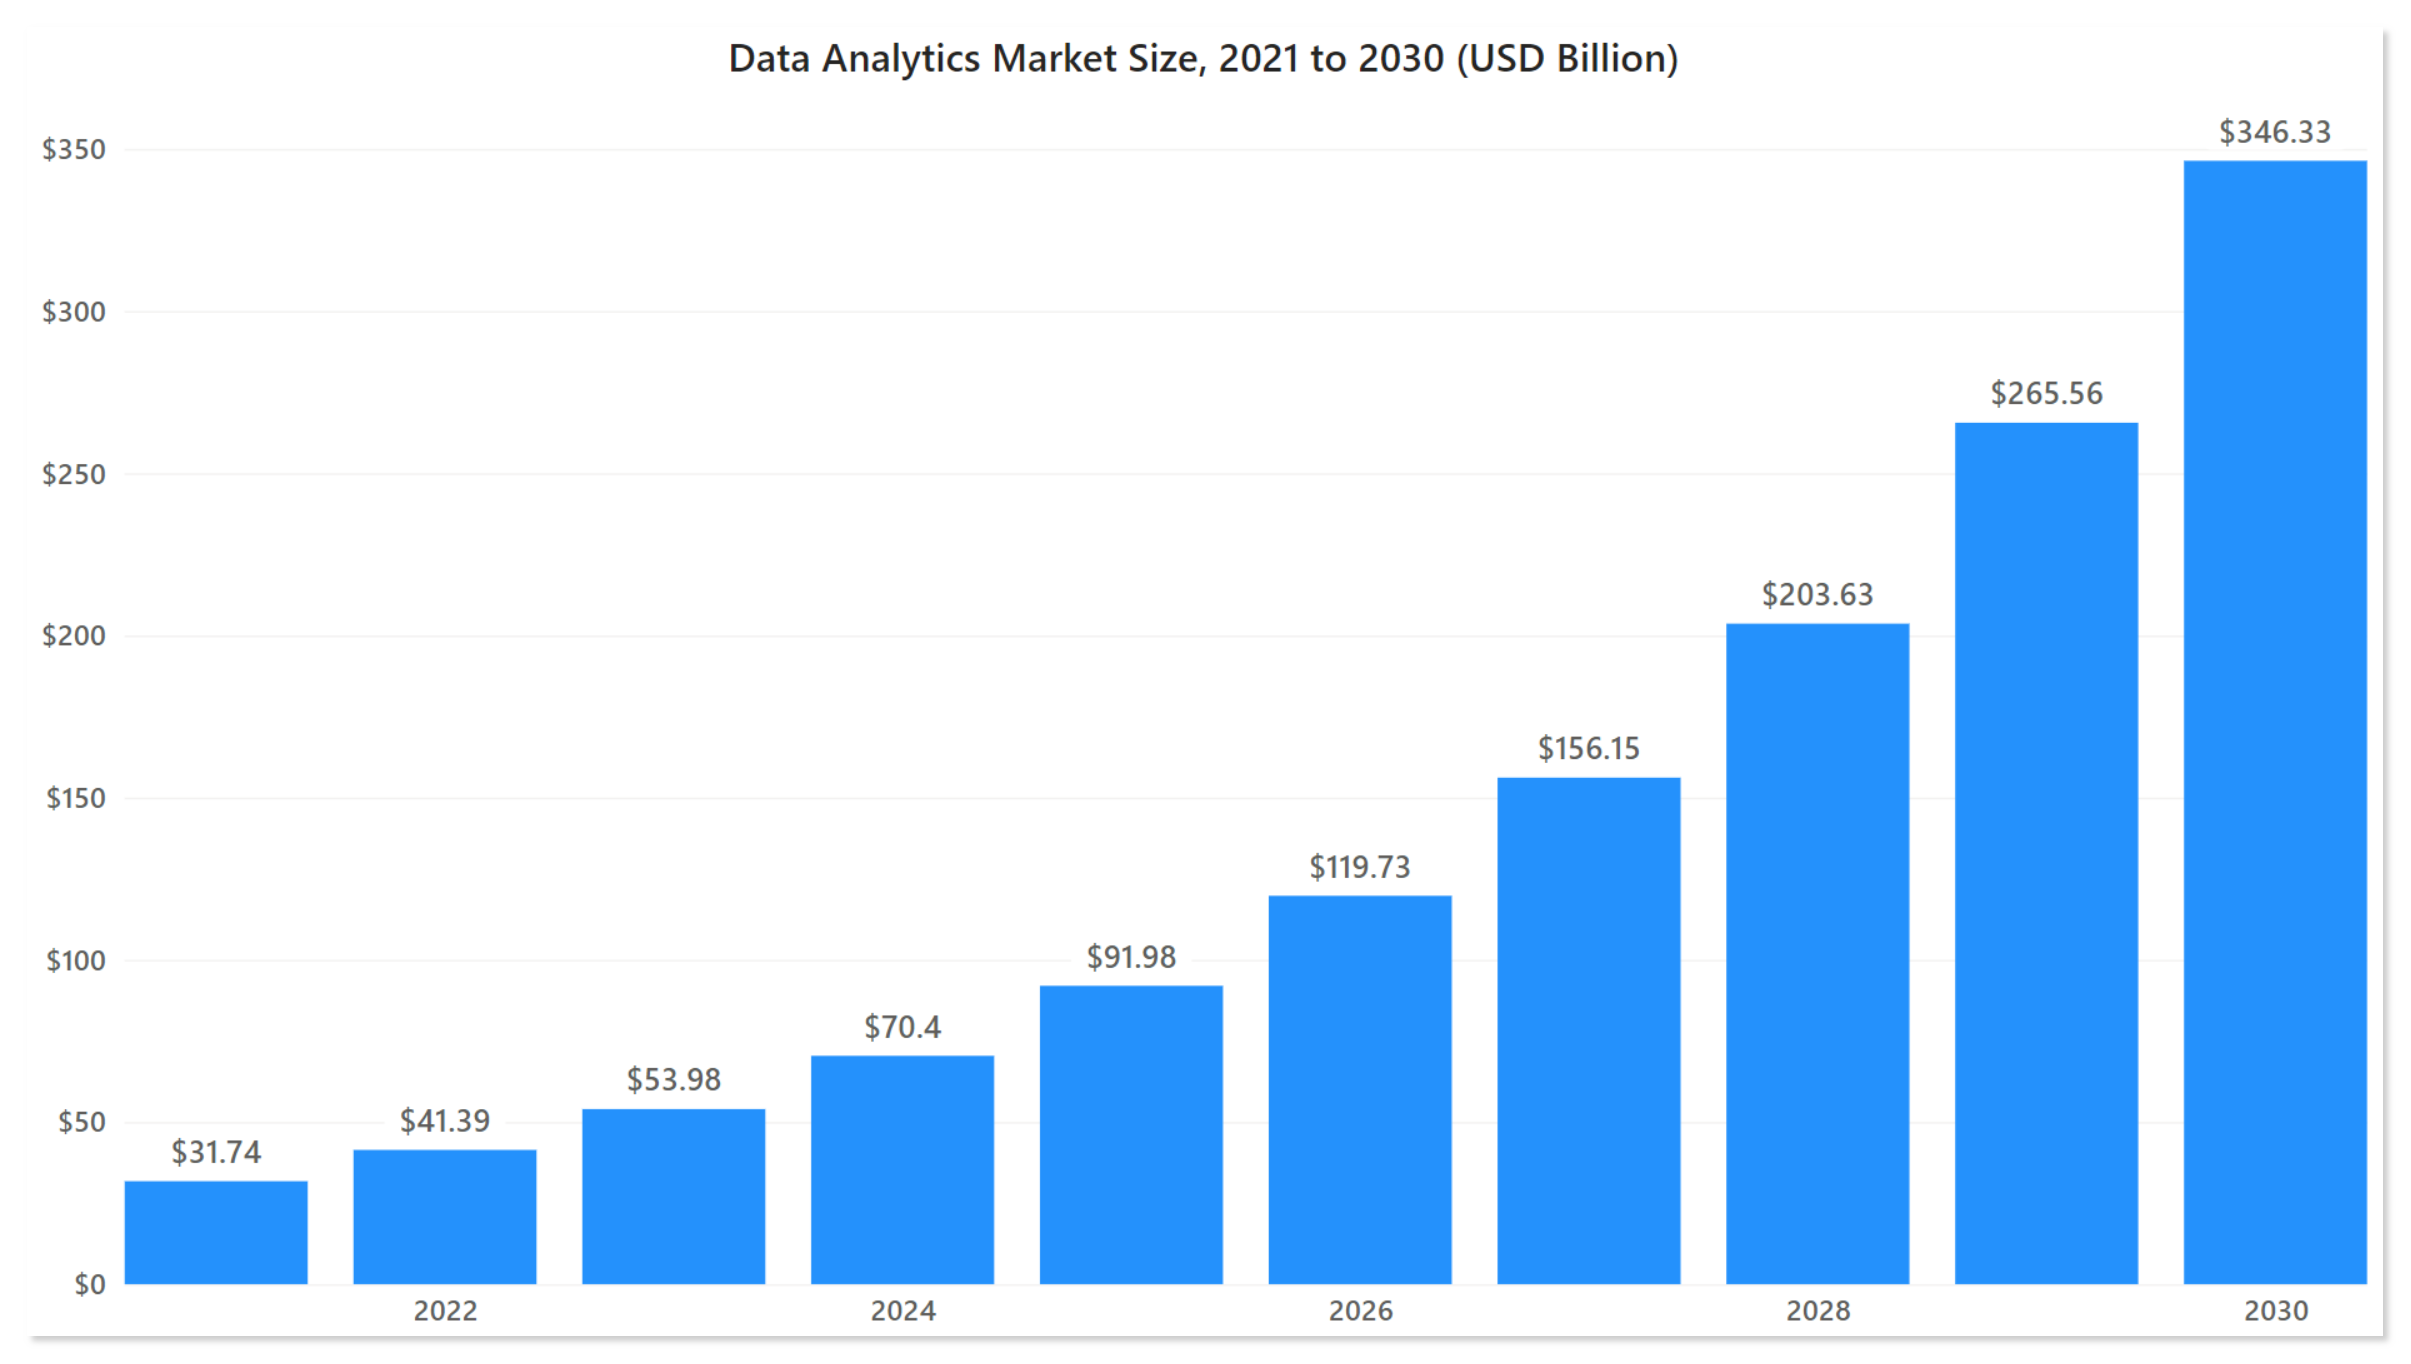 Ukuran Pasar Analisis Data, 2021 hingga 2030 (Miliar Dolar AS)